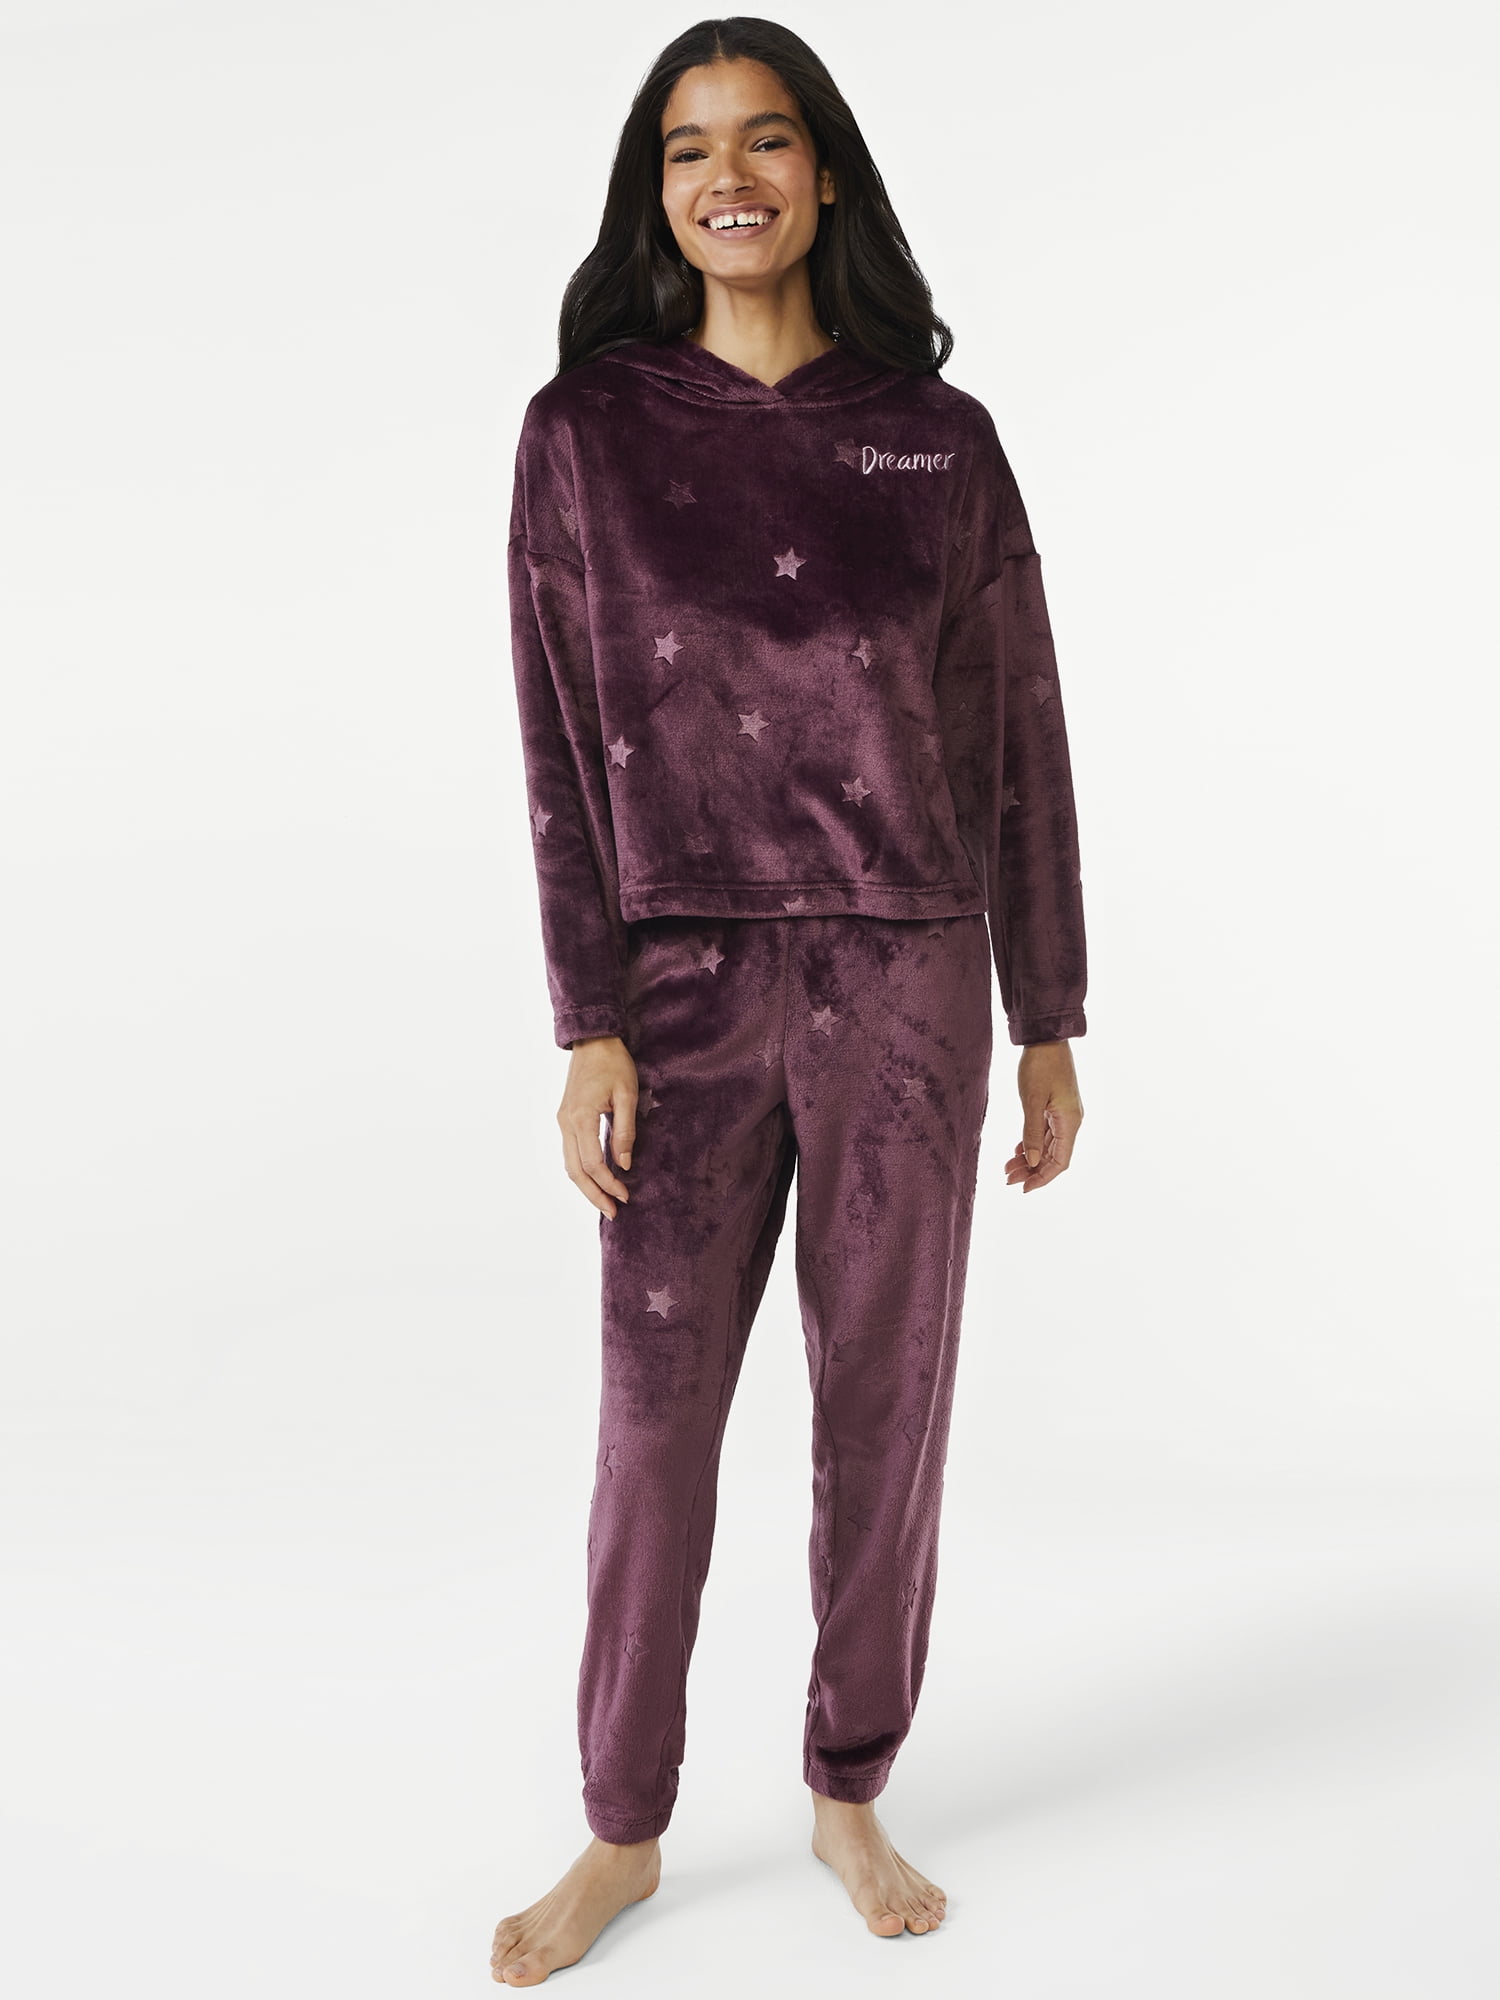 Joyspun Women's Star Print Plush Hoodie and Pants Pajama Set, 2-Piece, Sizes up to 3X